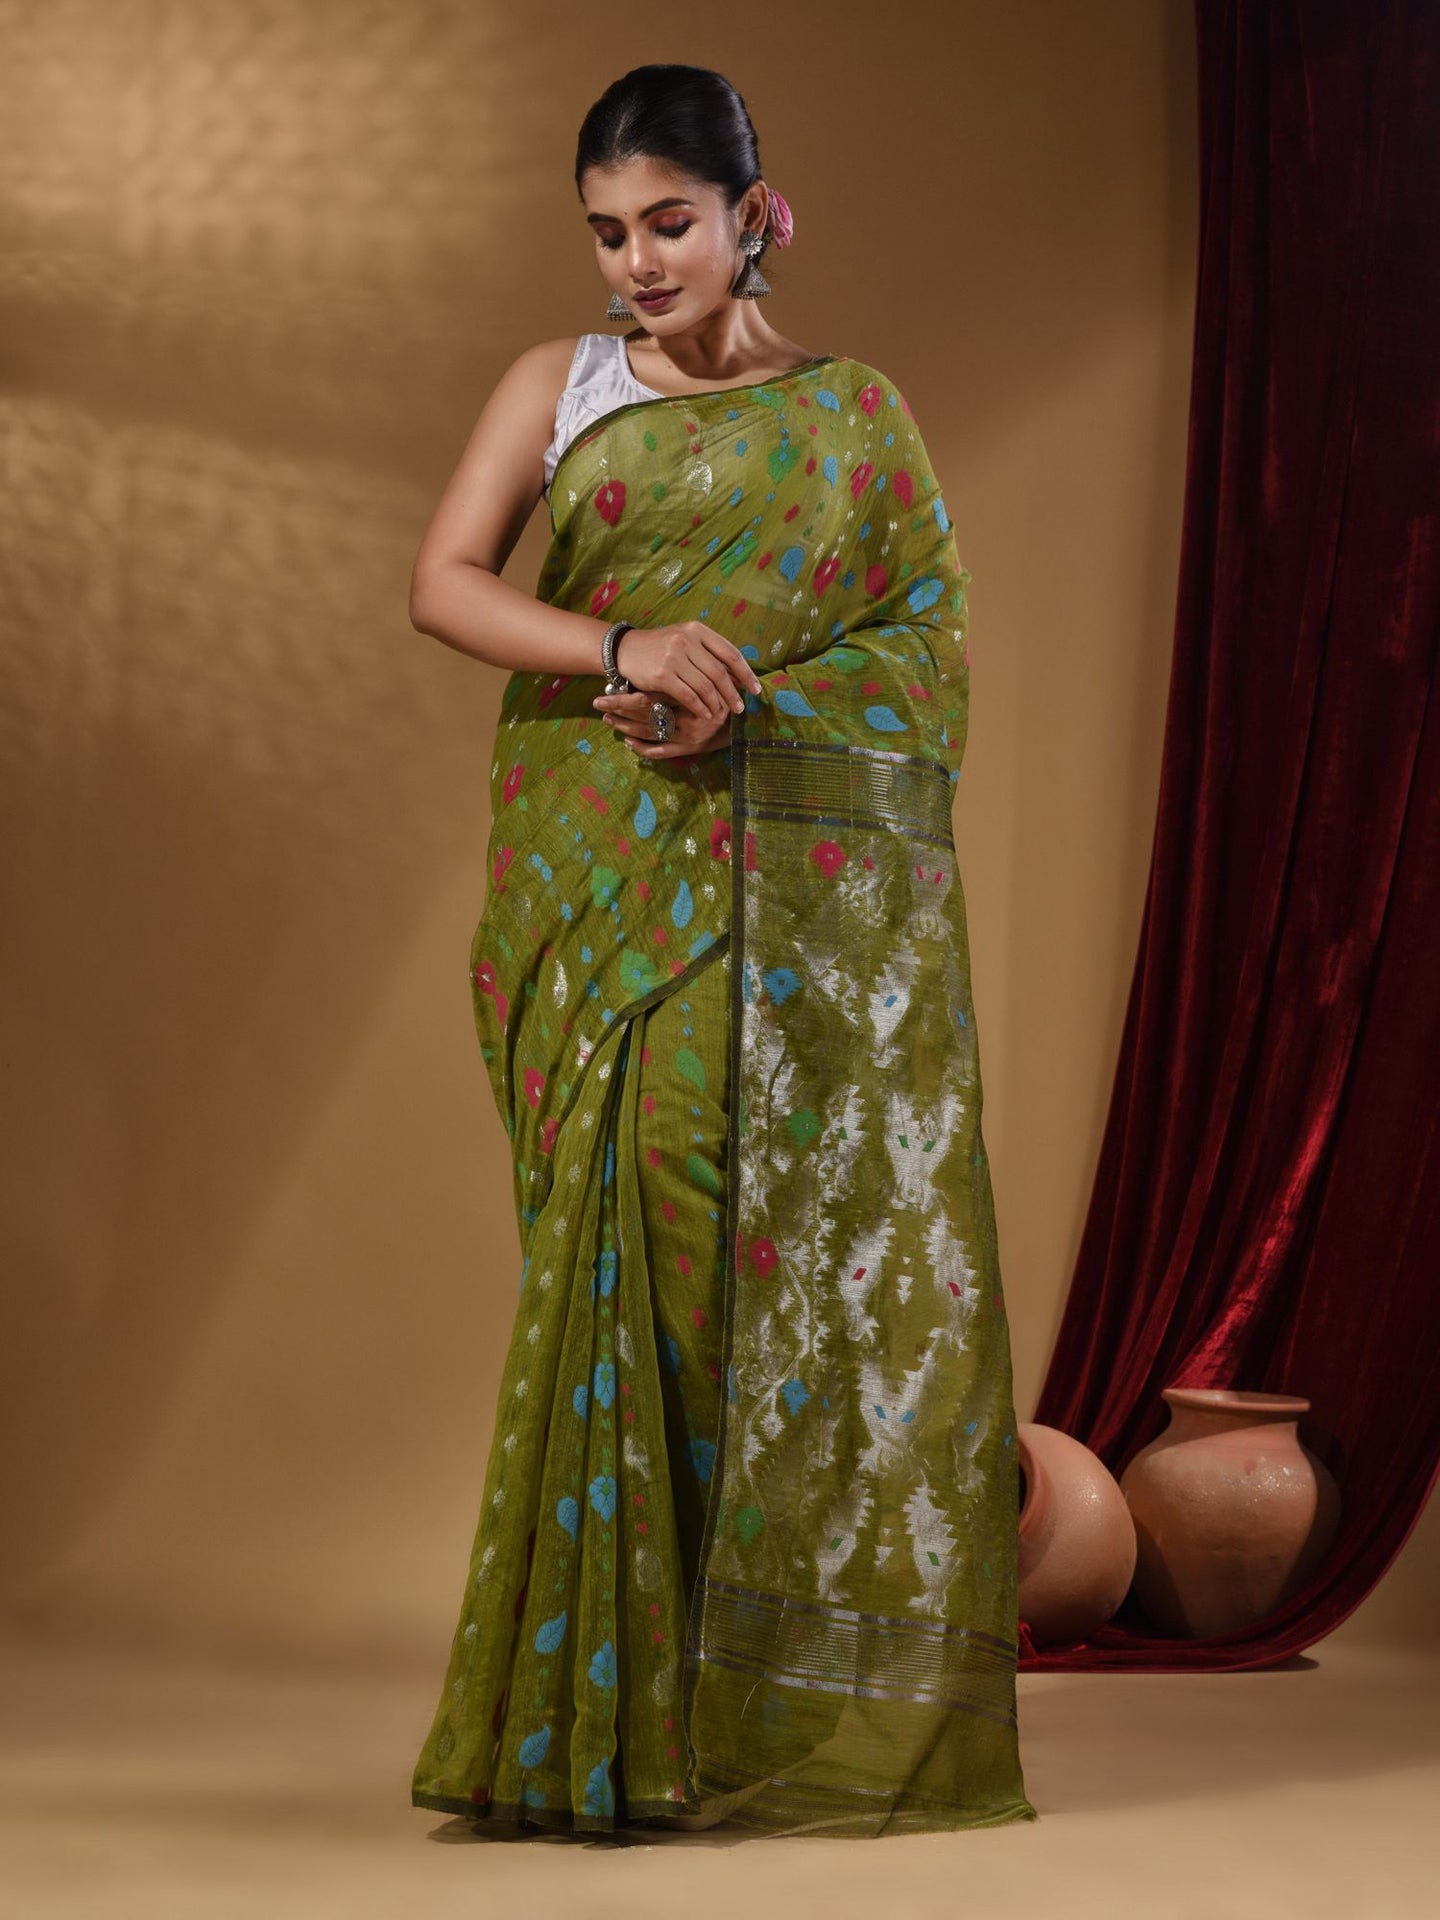 Sap Green Cotton Handwoven Jamdani Saree With Multicolor Woven Designs And Motifs